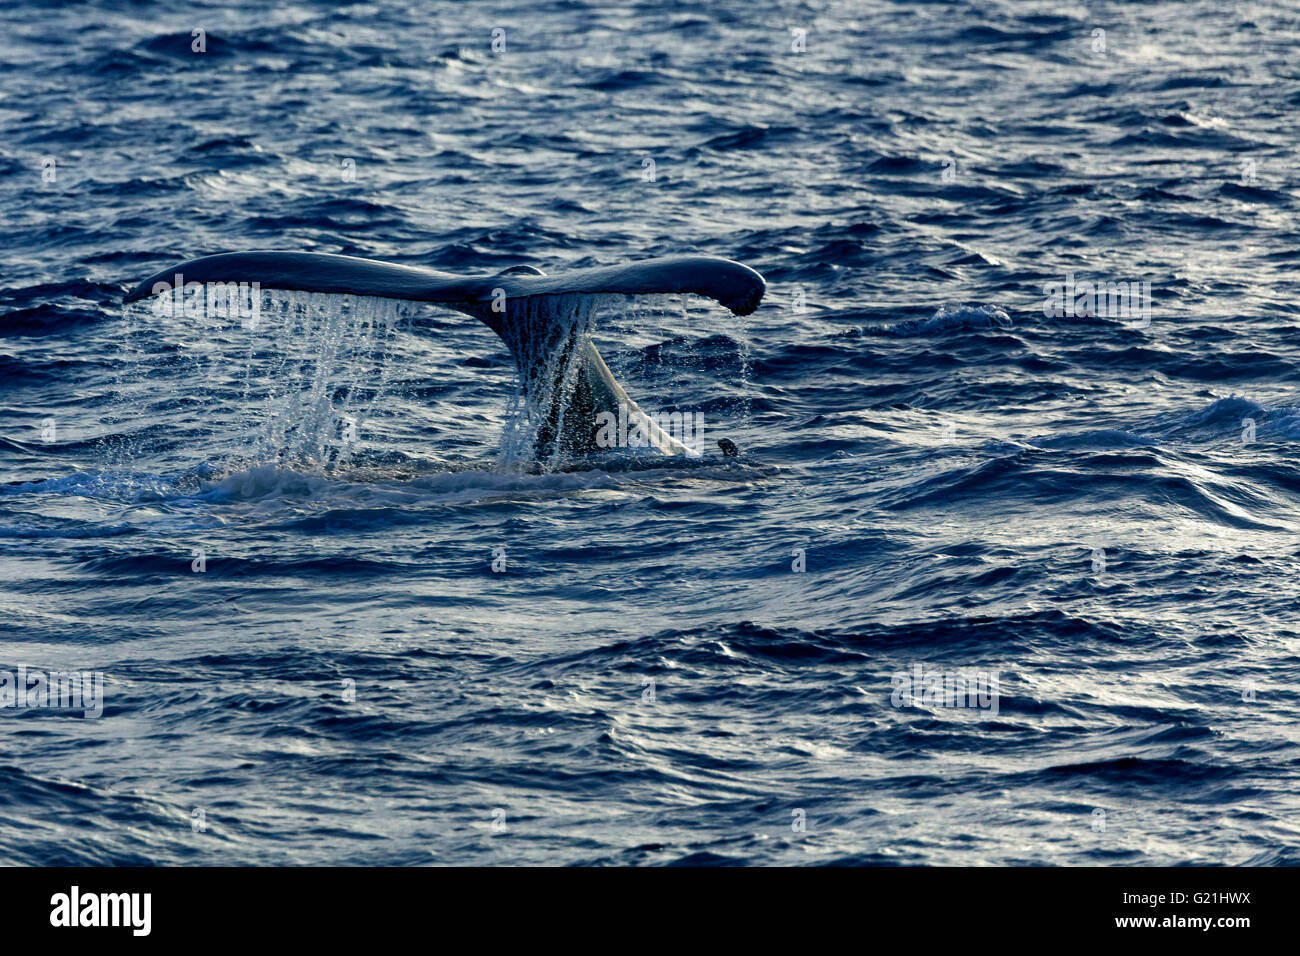 Humpback whale (Megaptera novaeangliae), Fluke, Silver Bank, Silver and Navidad Bank Sanctuary, Atlantic Ocean Stock Photo